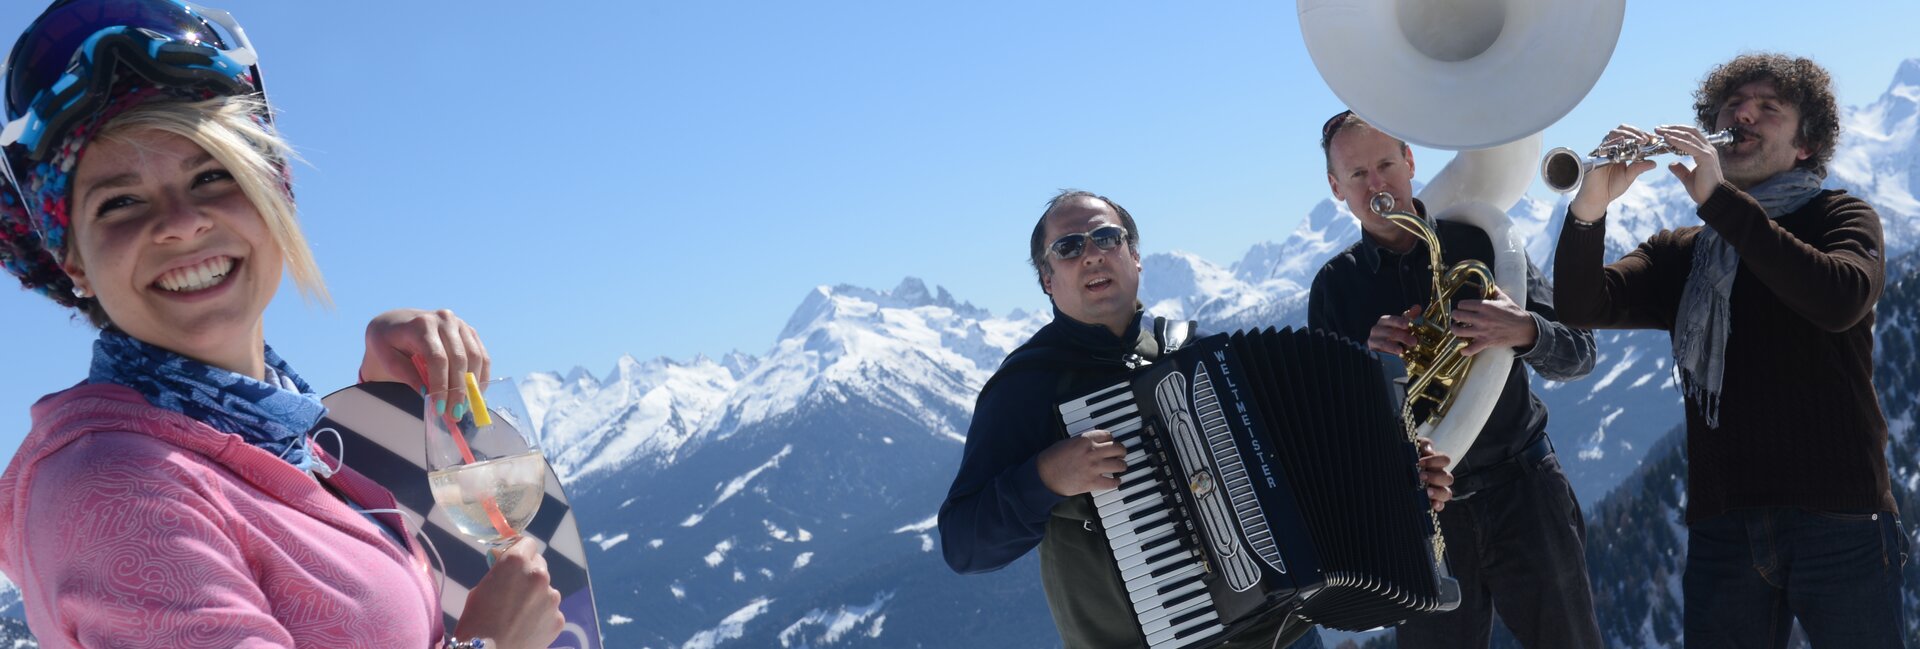 Dolomiti Ski Jazz, Skivergnügen uns Musik!